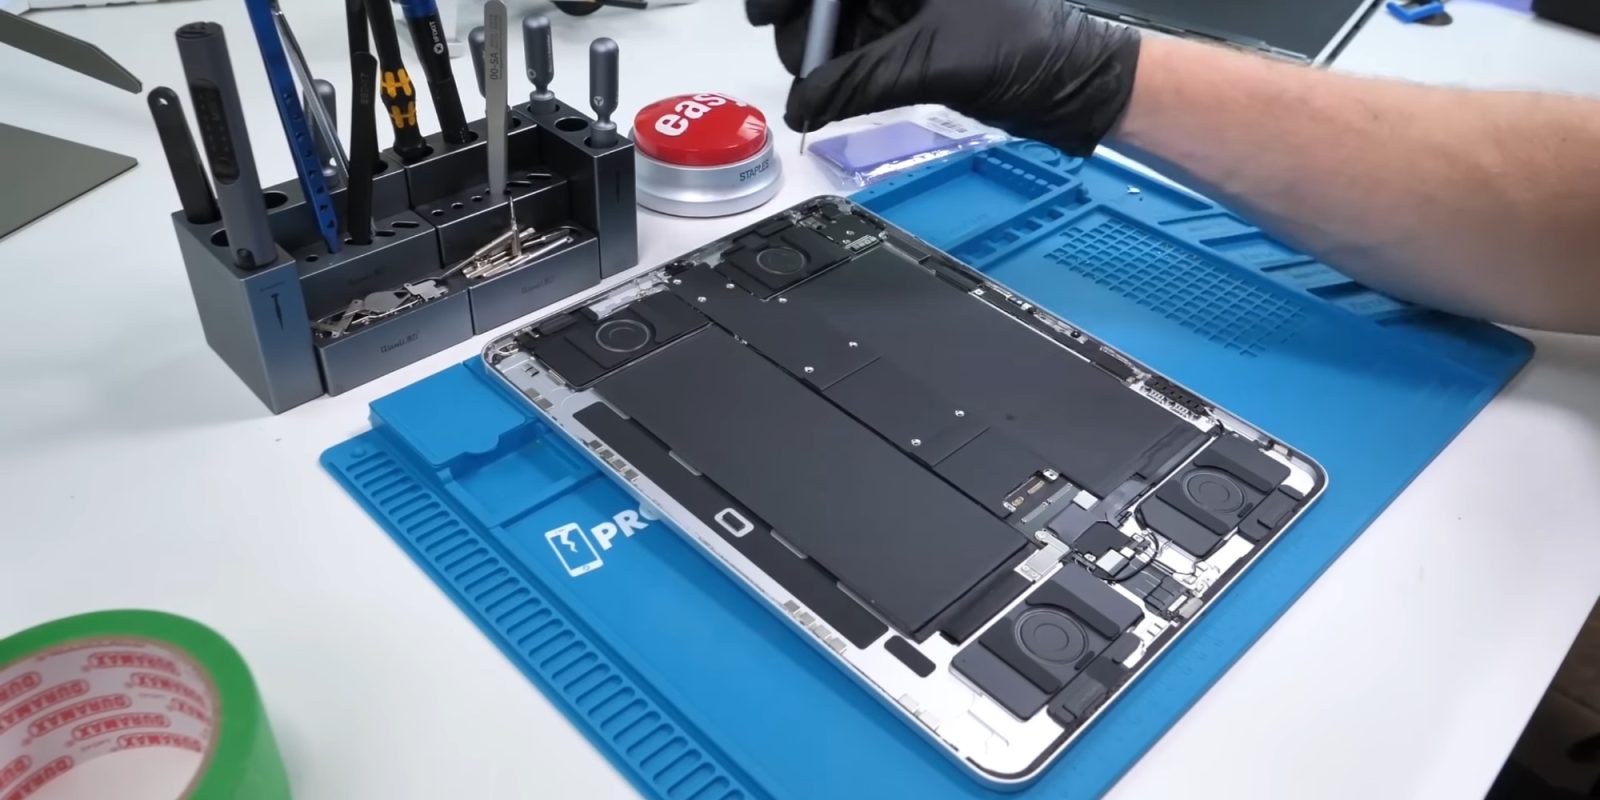 M4 iPad Pro teardown video: take a look inside Apple’s thinnest product ever